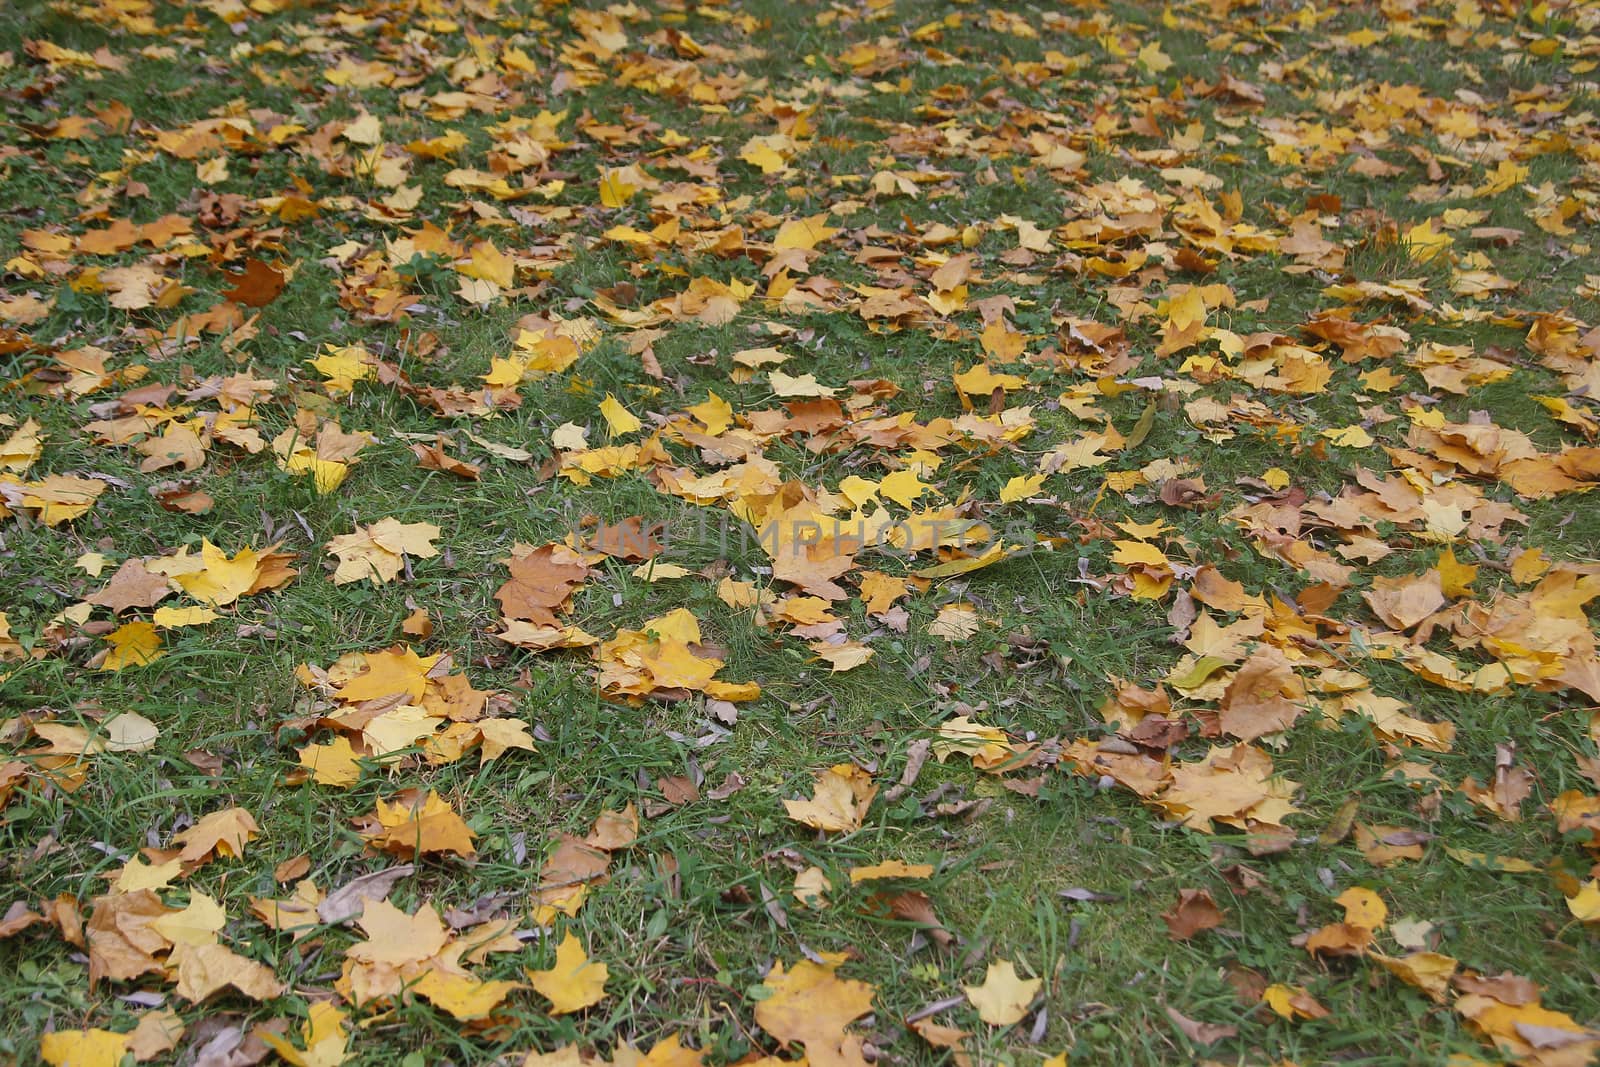 Autumn leaves fallen in garden by pumppump